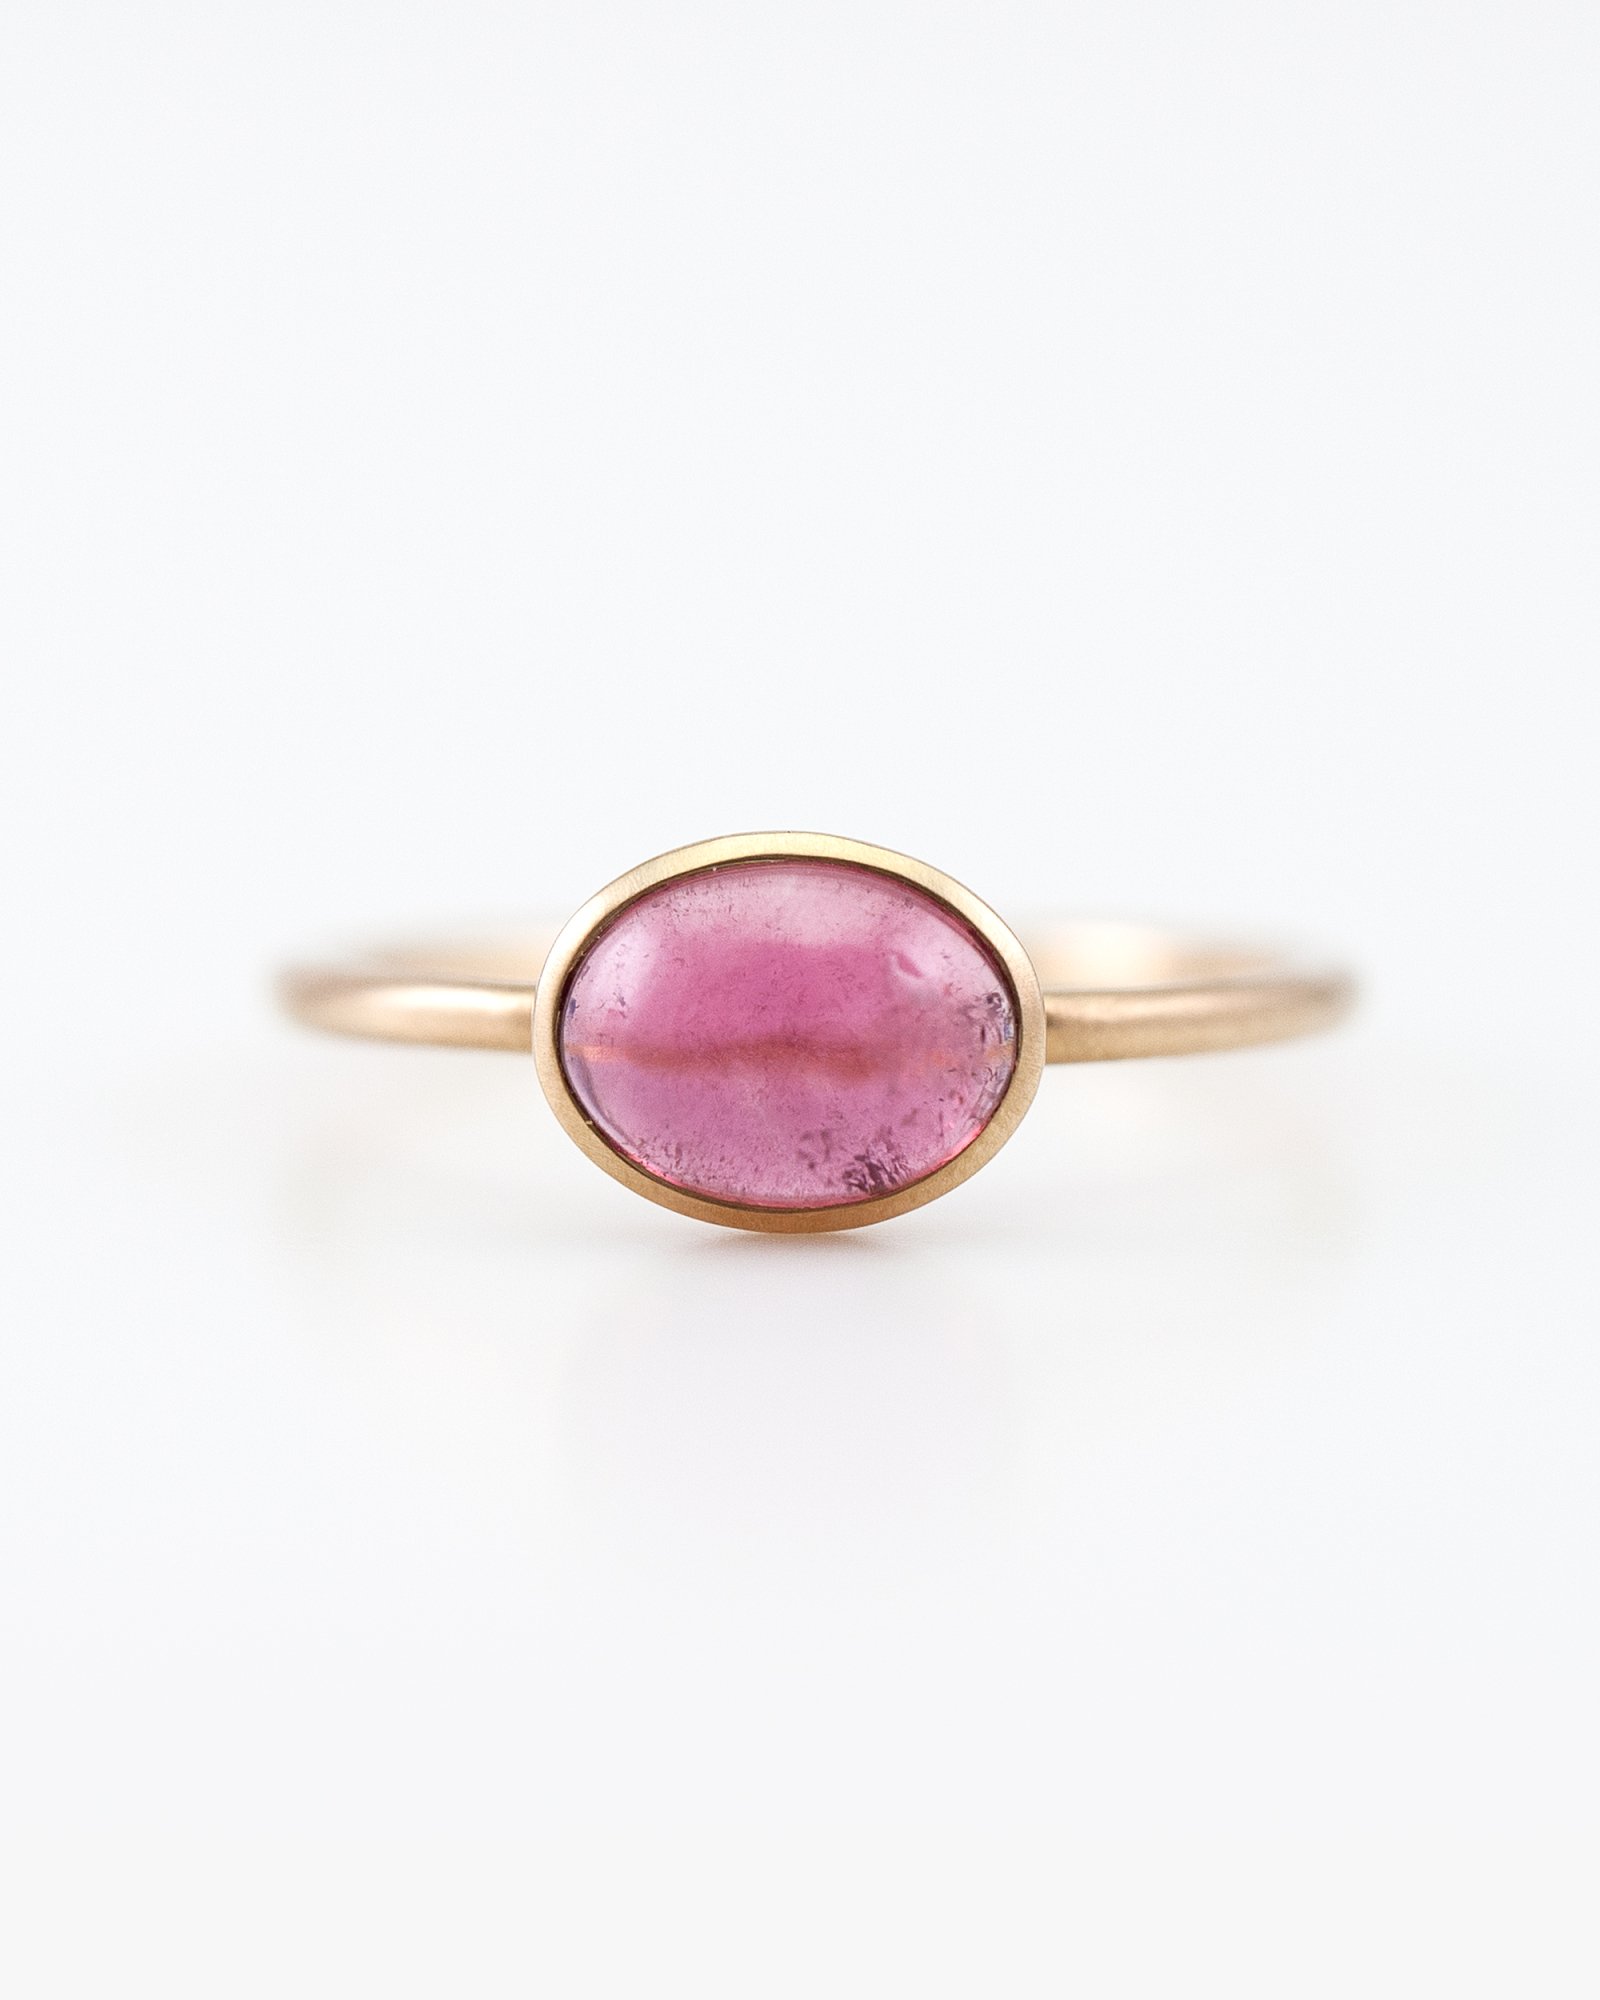 K18 Pink Tourmaline Ring / Cabochon